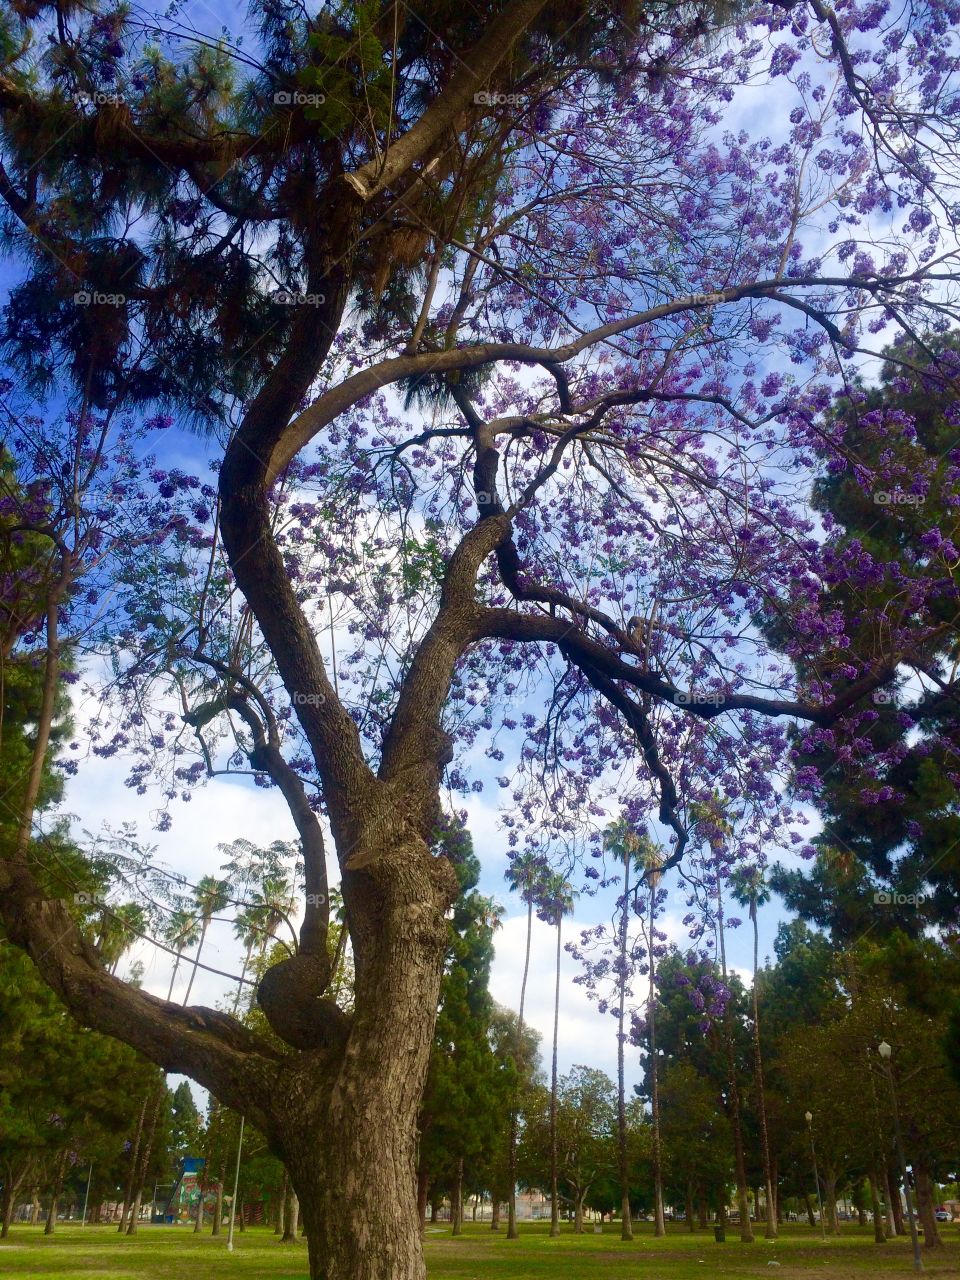 The Jacaranda tree 